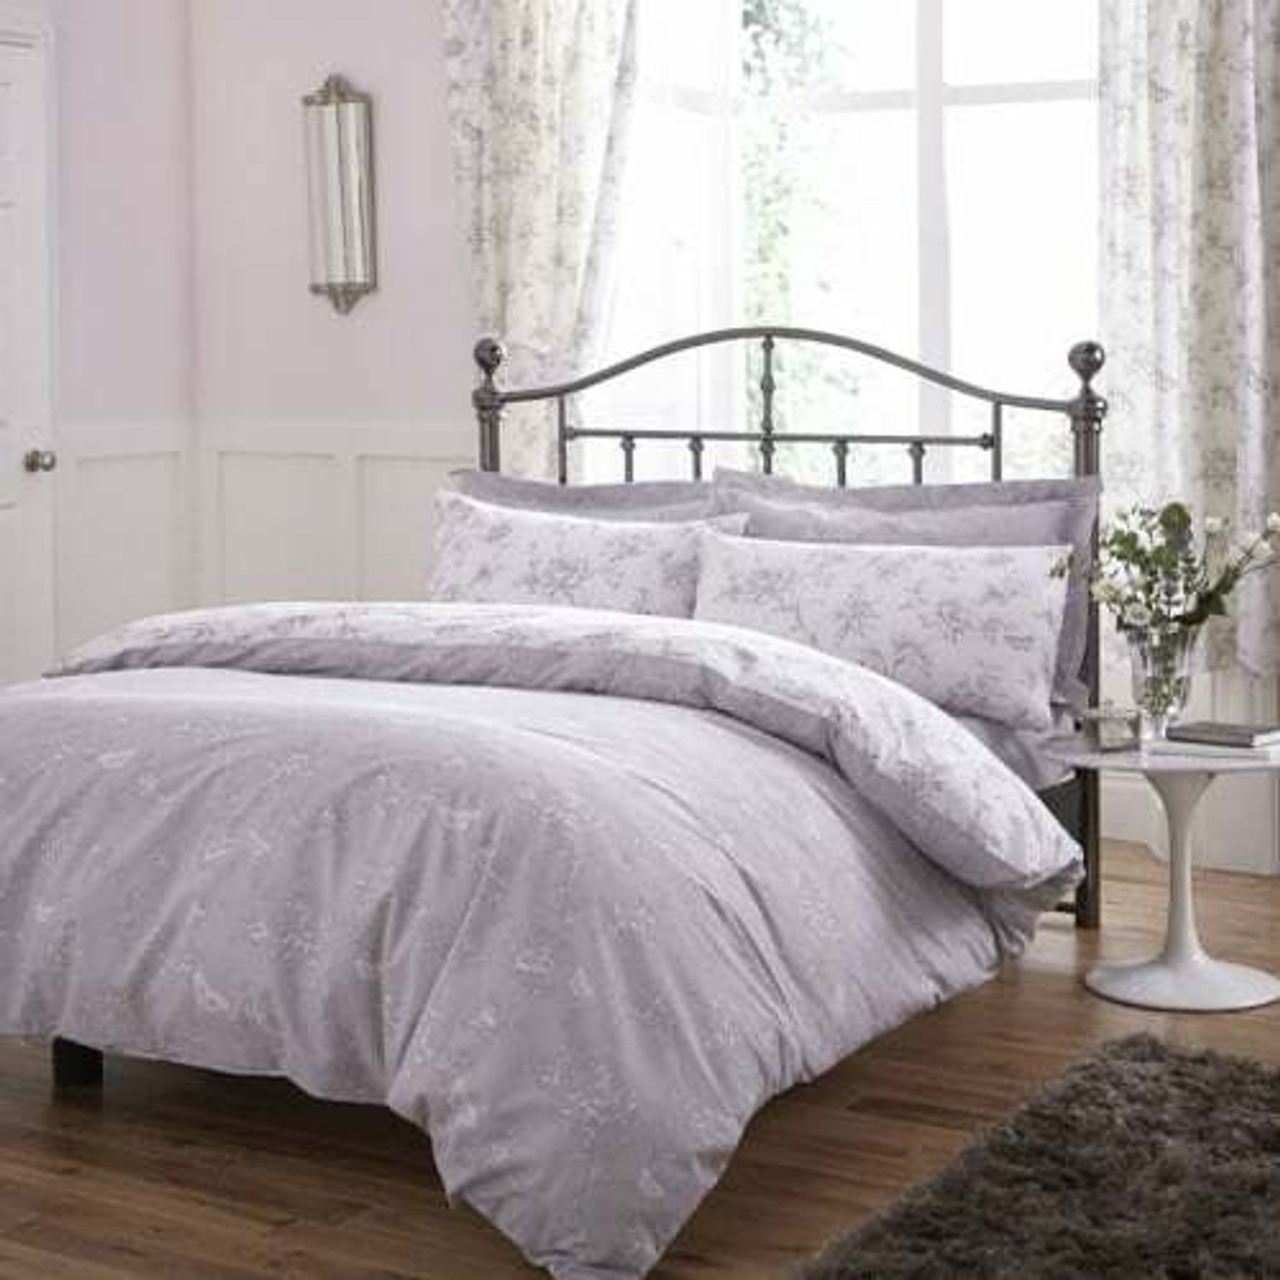  Grey Floral Bedding